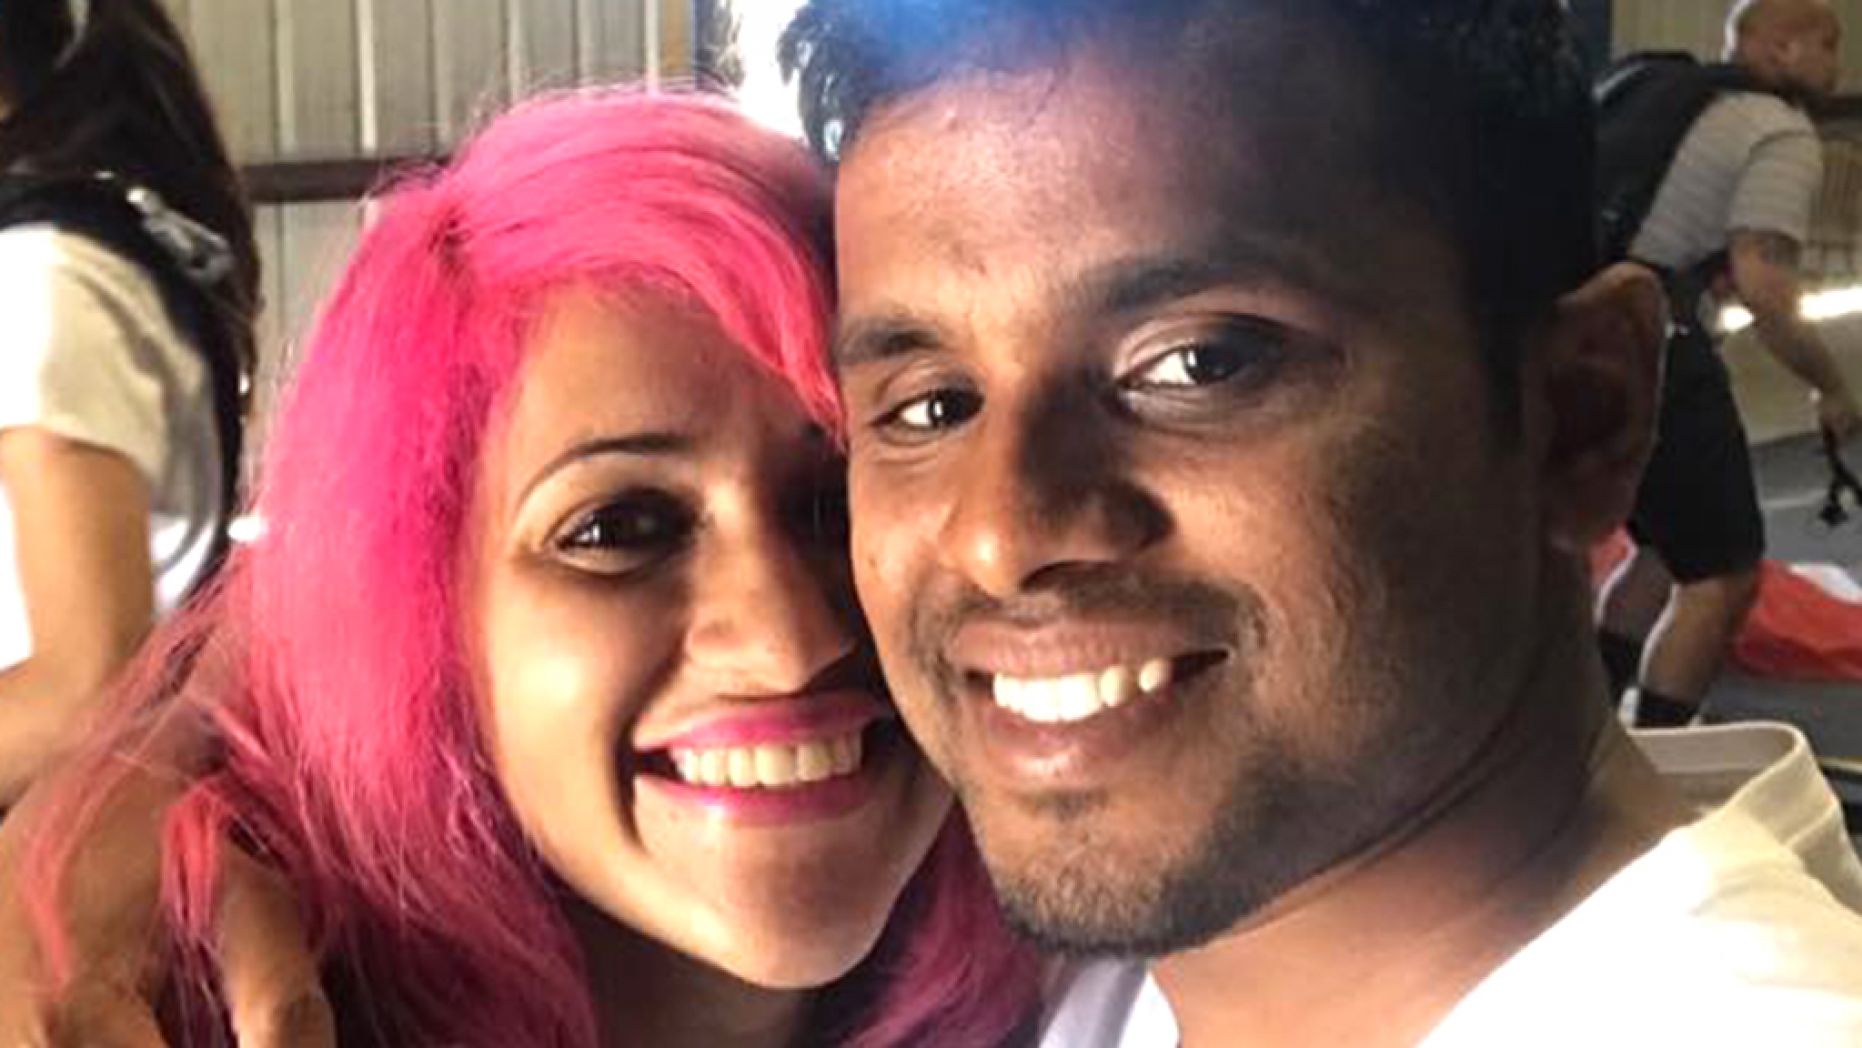 Vishnu e Meenakshi morreram tentando tirar uma selfie